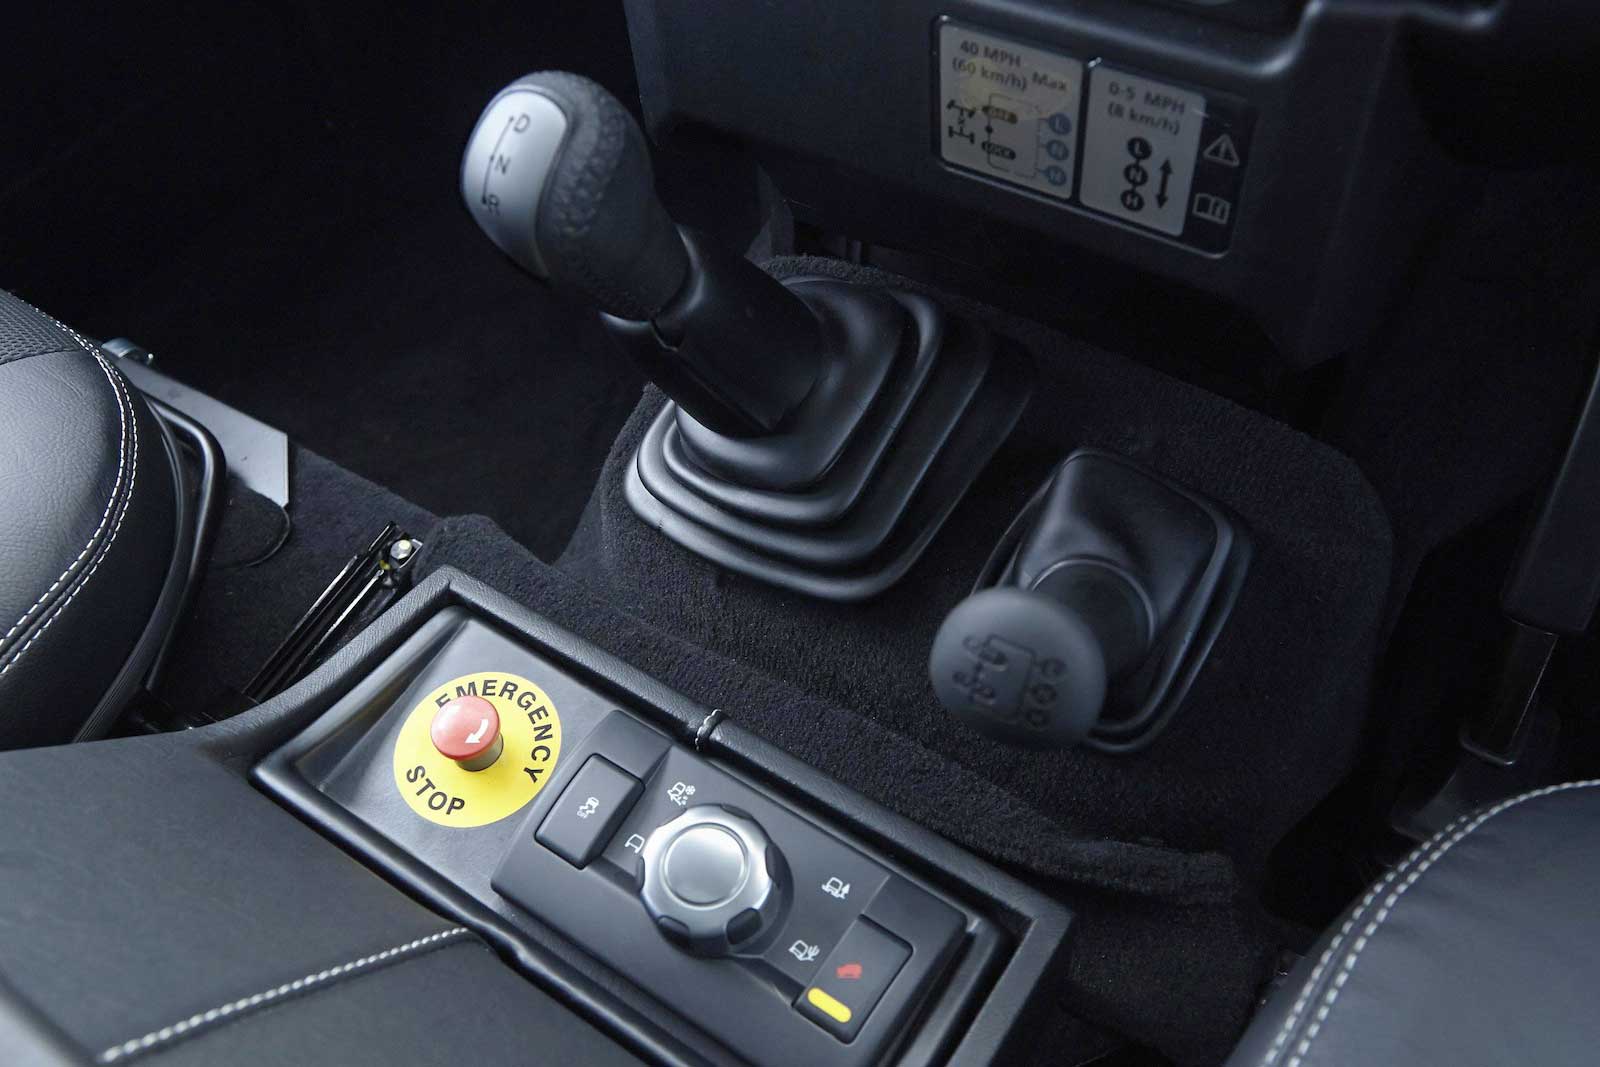 Land Rover Defender 130 interior gear view